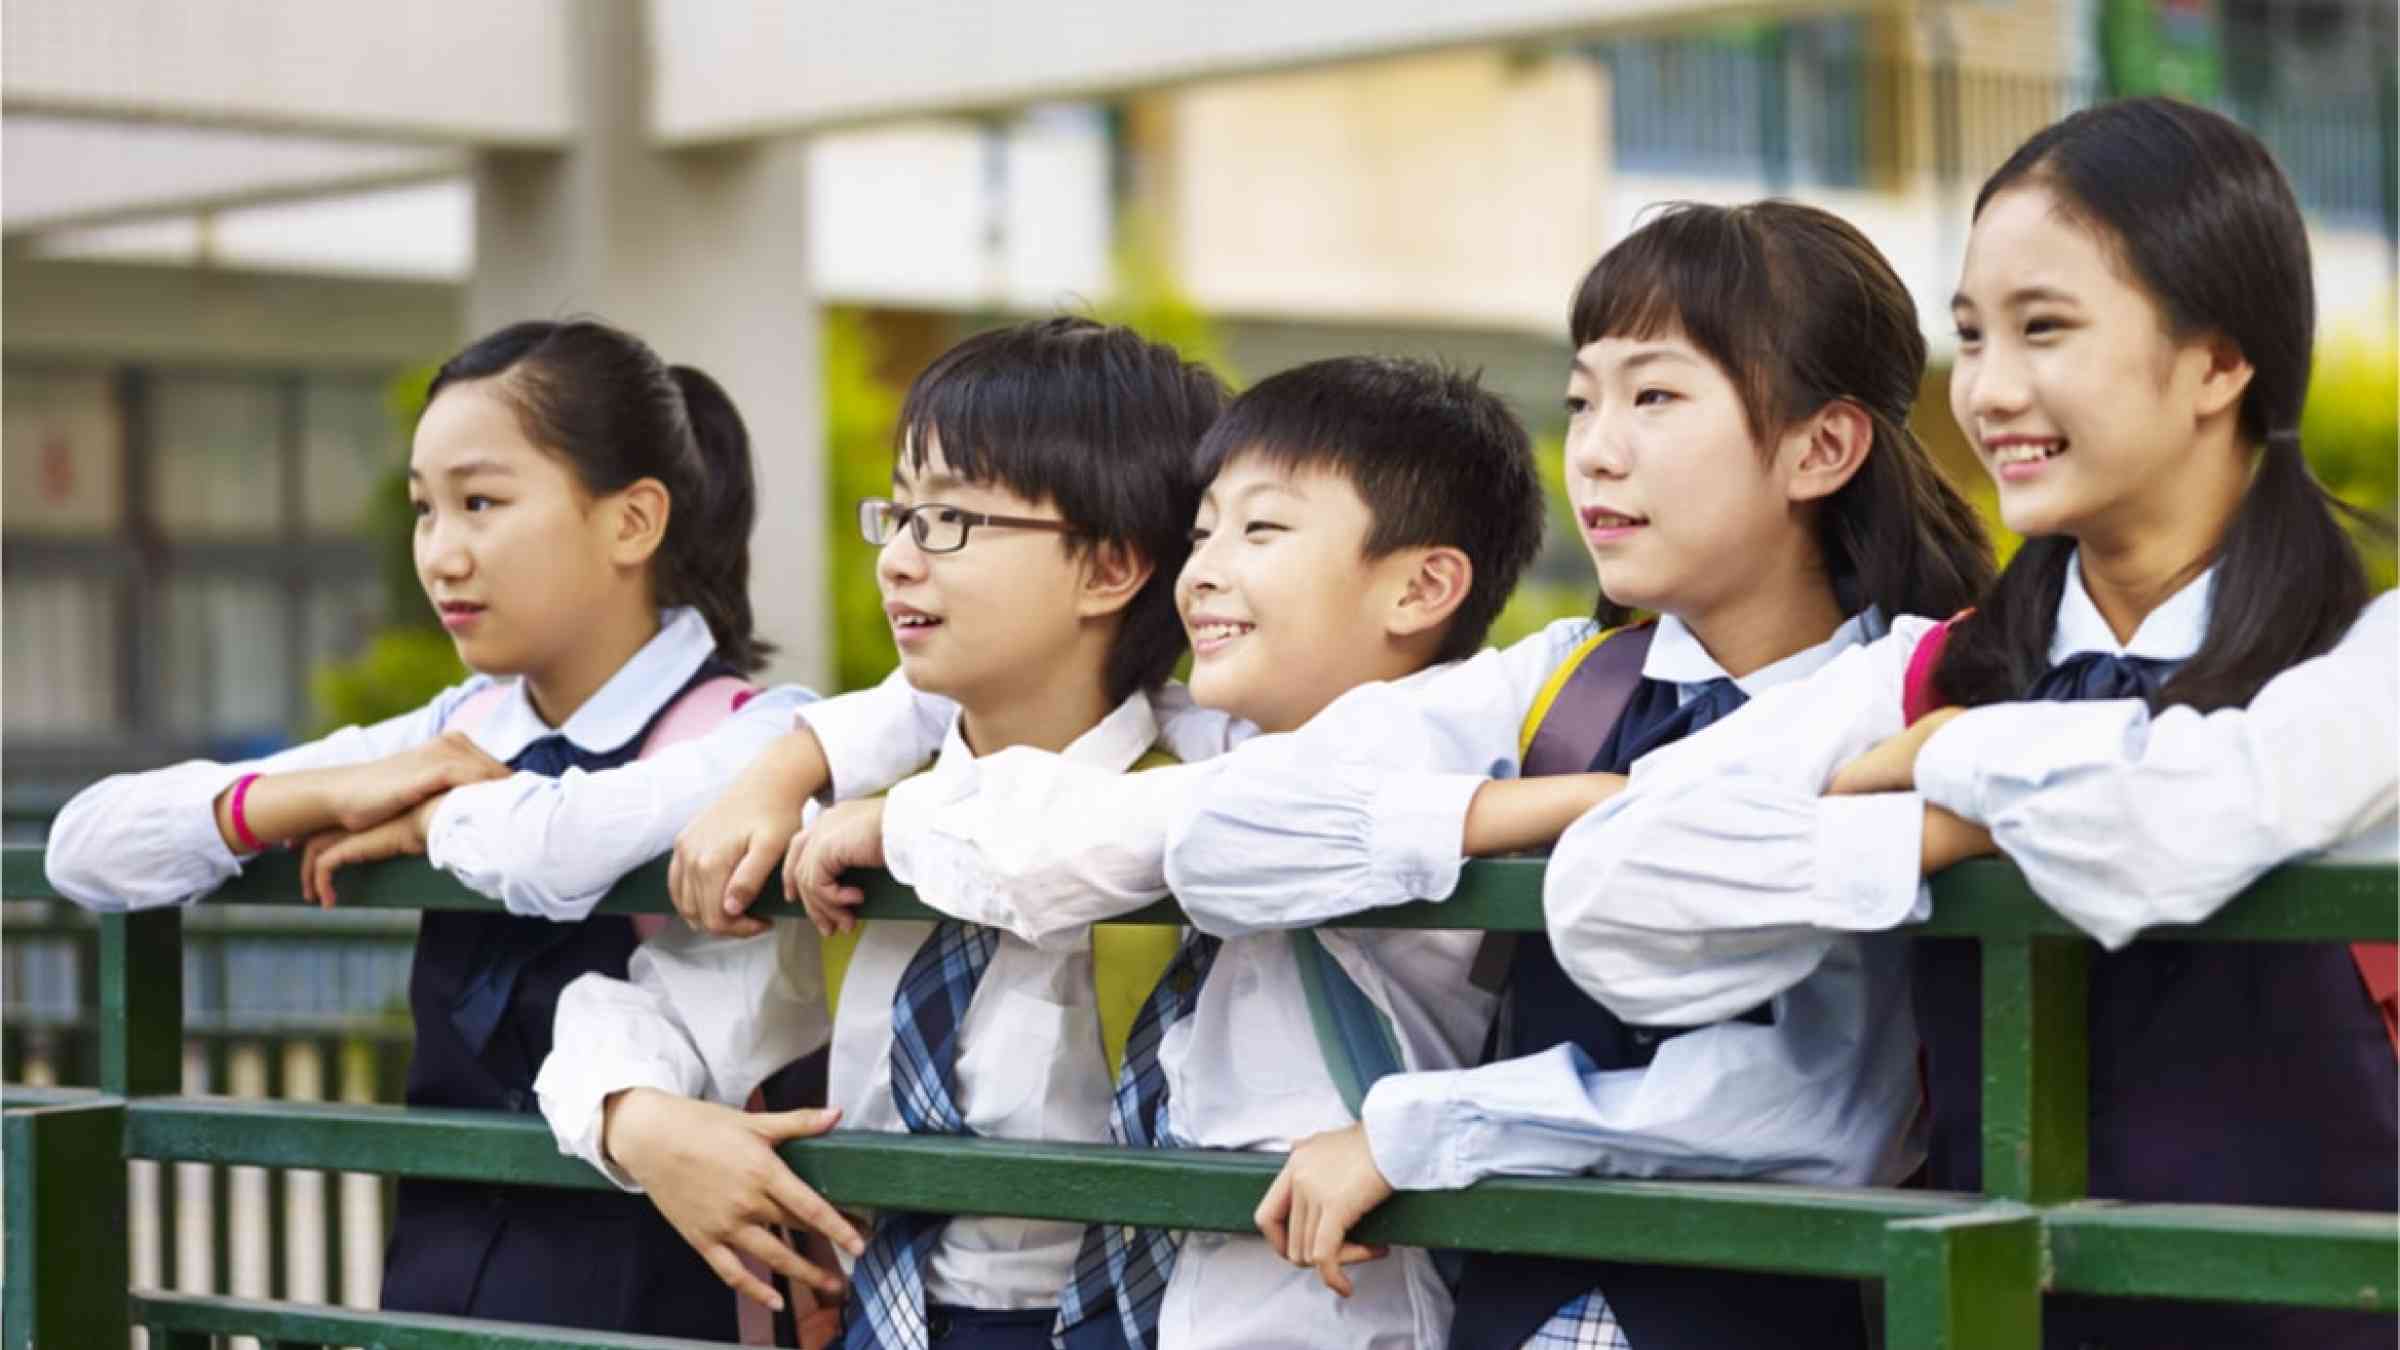 Five Japanese school students in uniform.